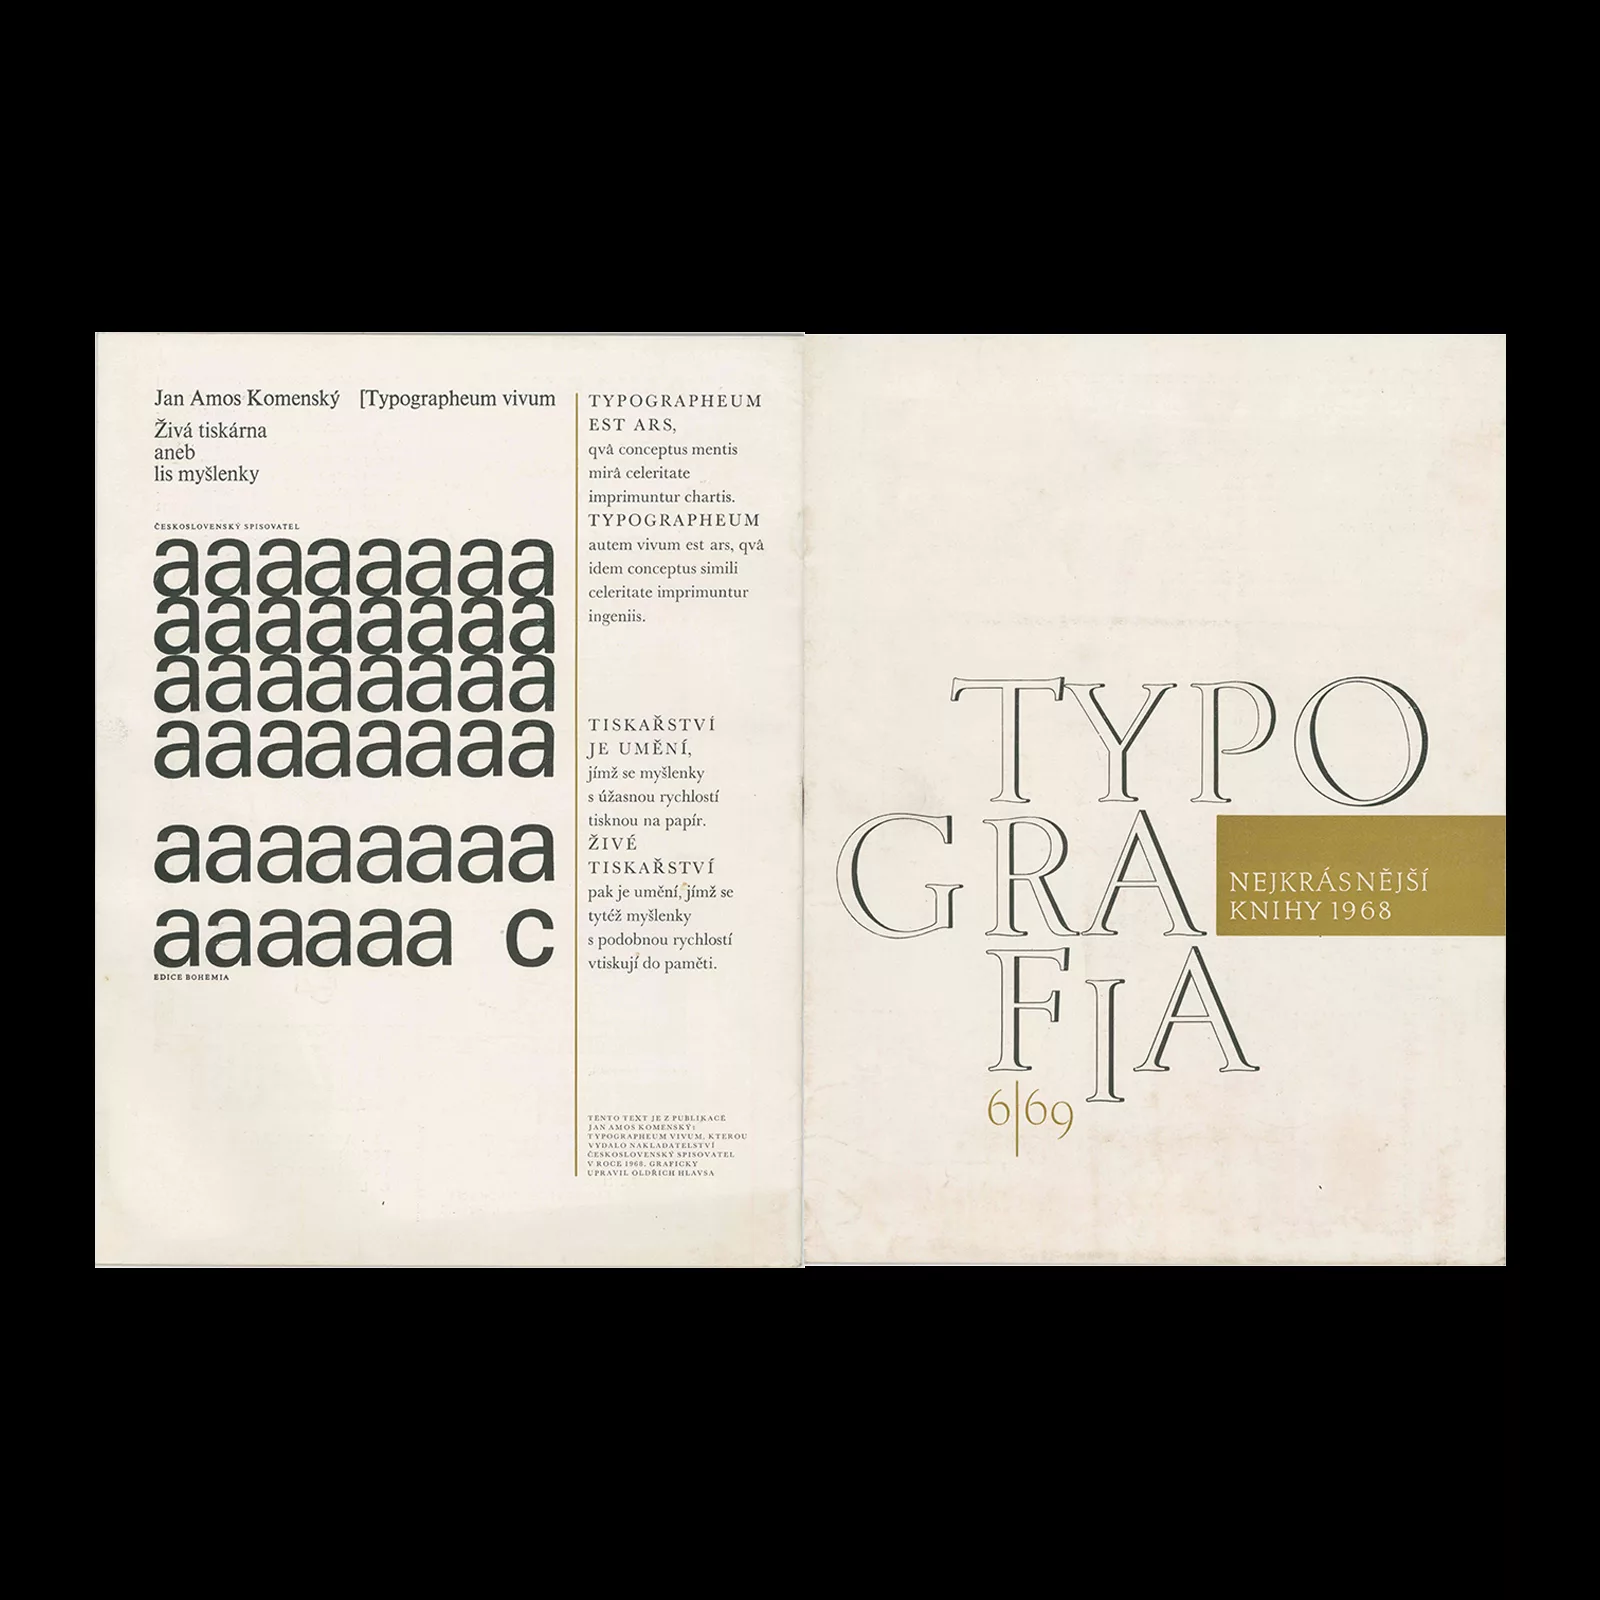 Typografia, ročník 72, 6, 1969. Cover design by Milan Hegar